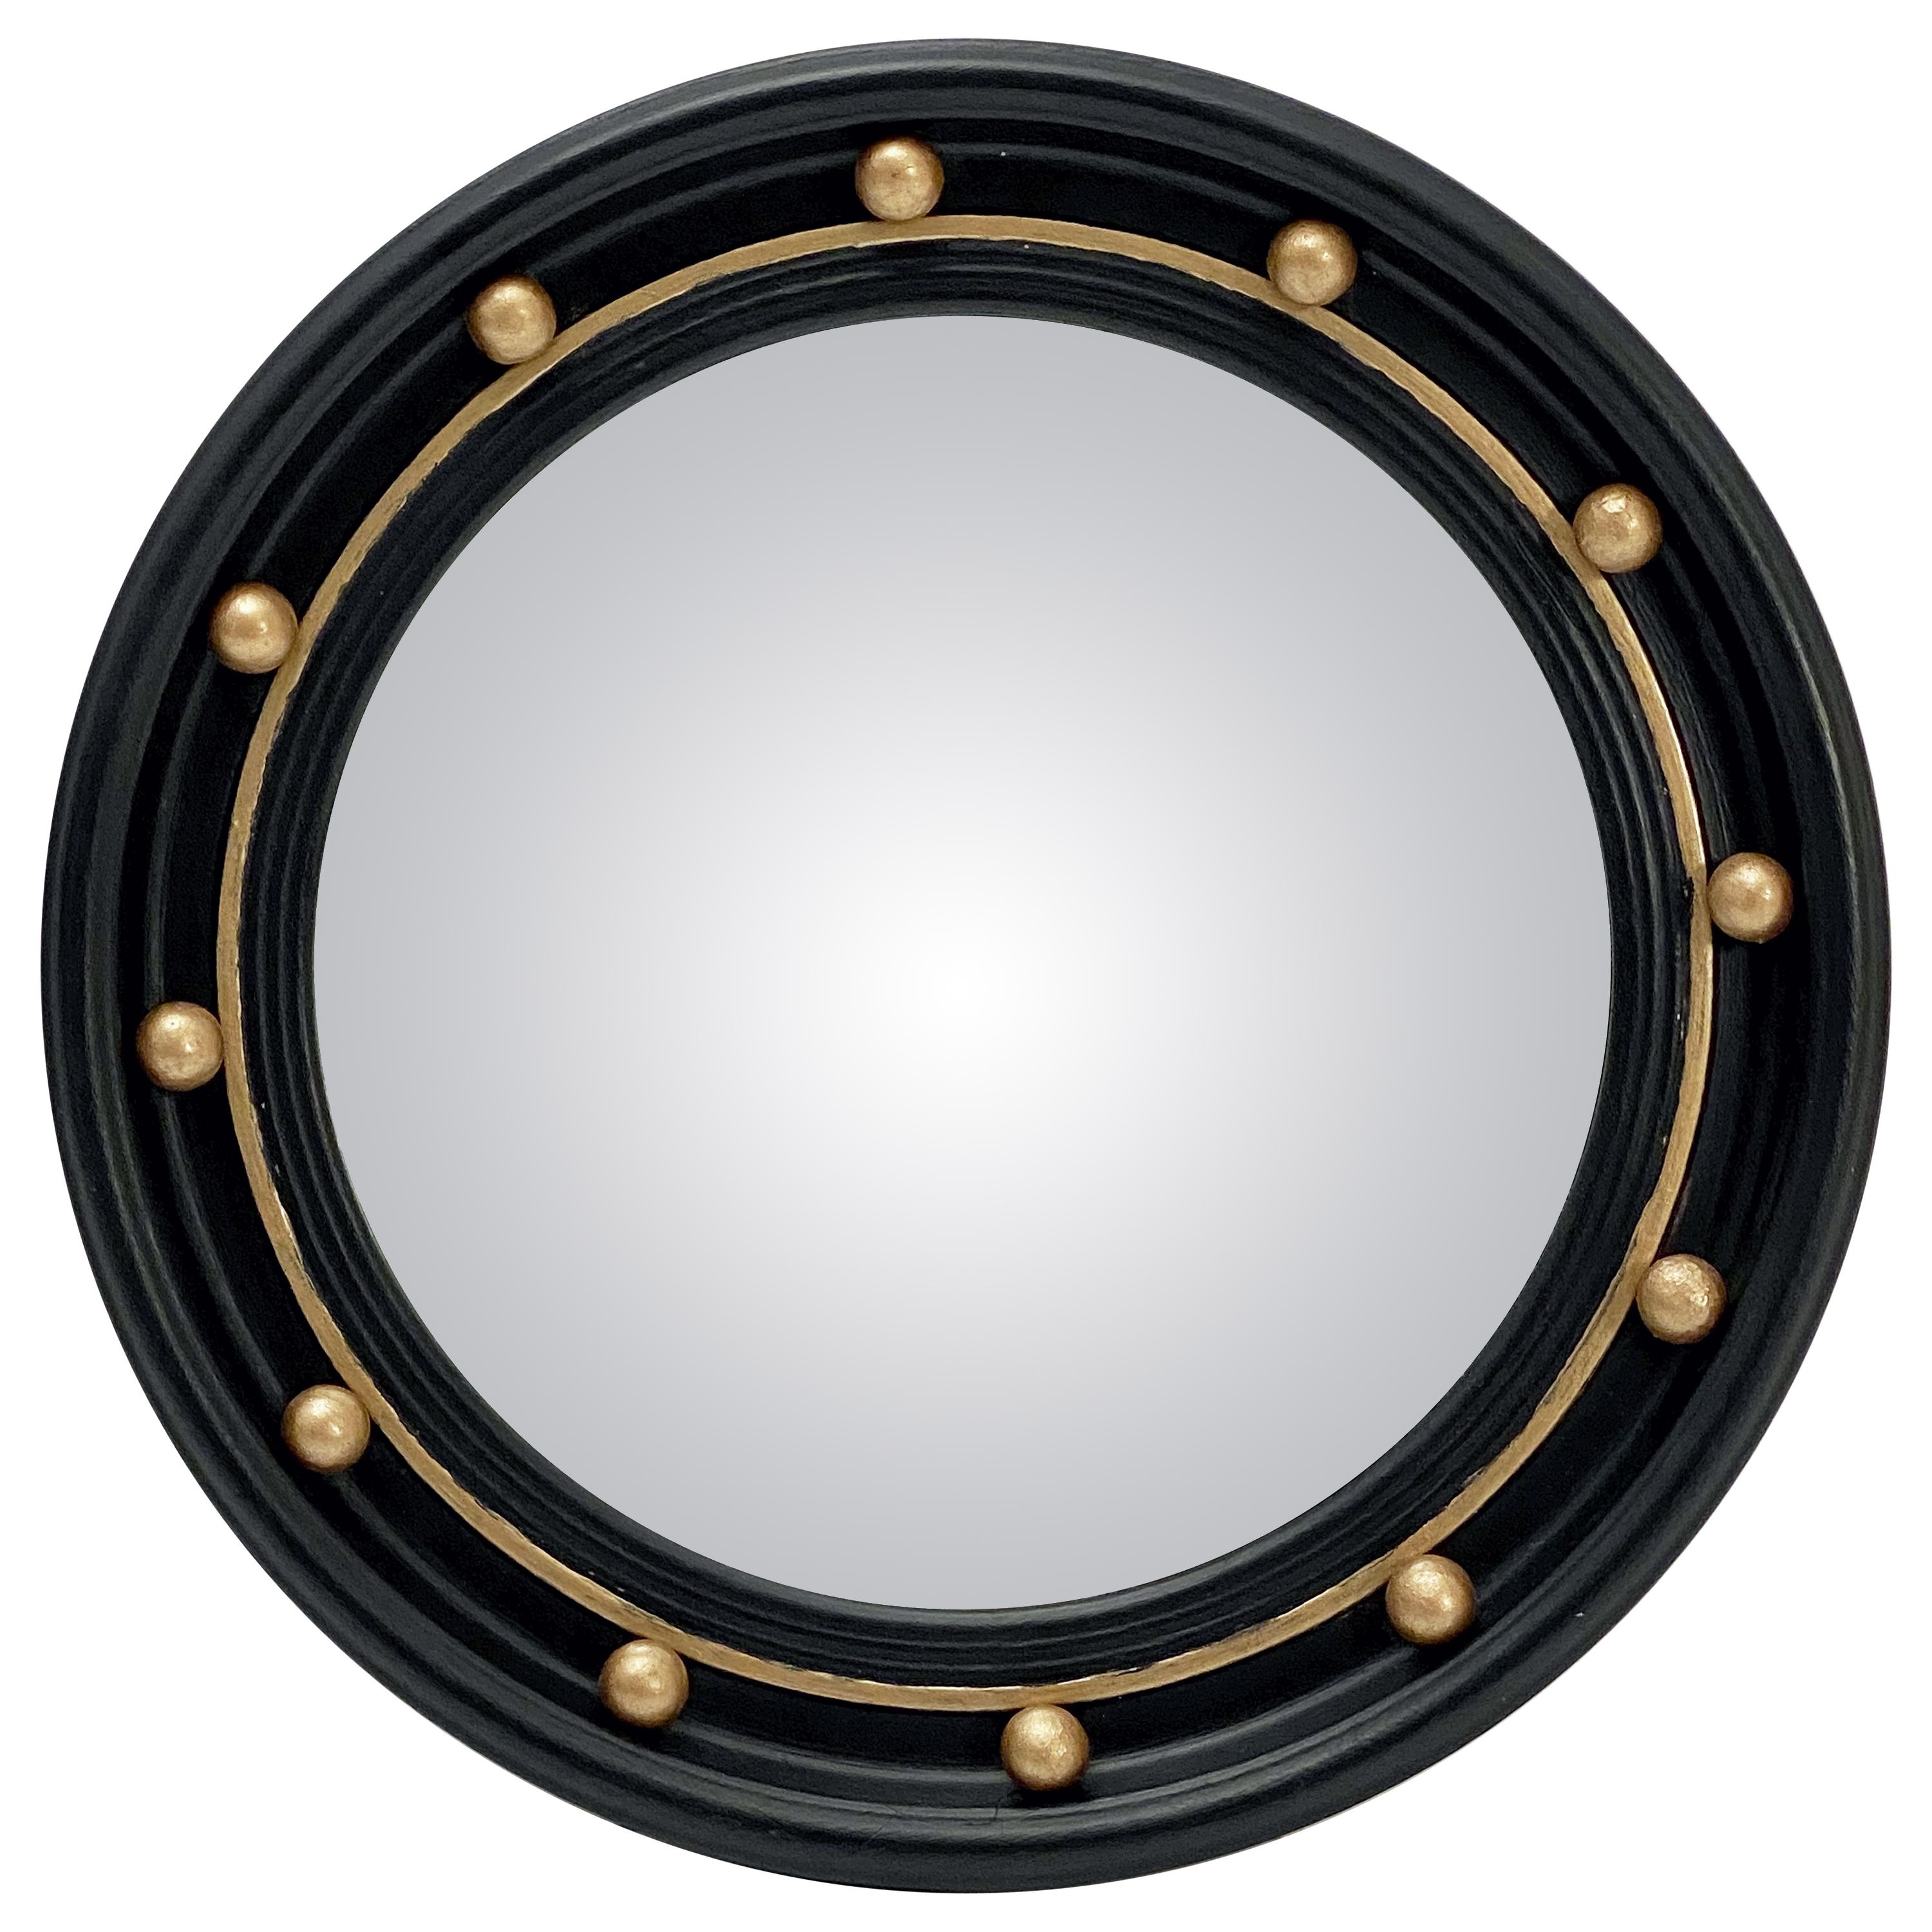 English Round Ebony Black and Gold Framed Convex Mirror (Diameter 16 14)